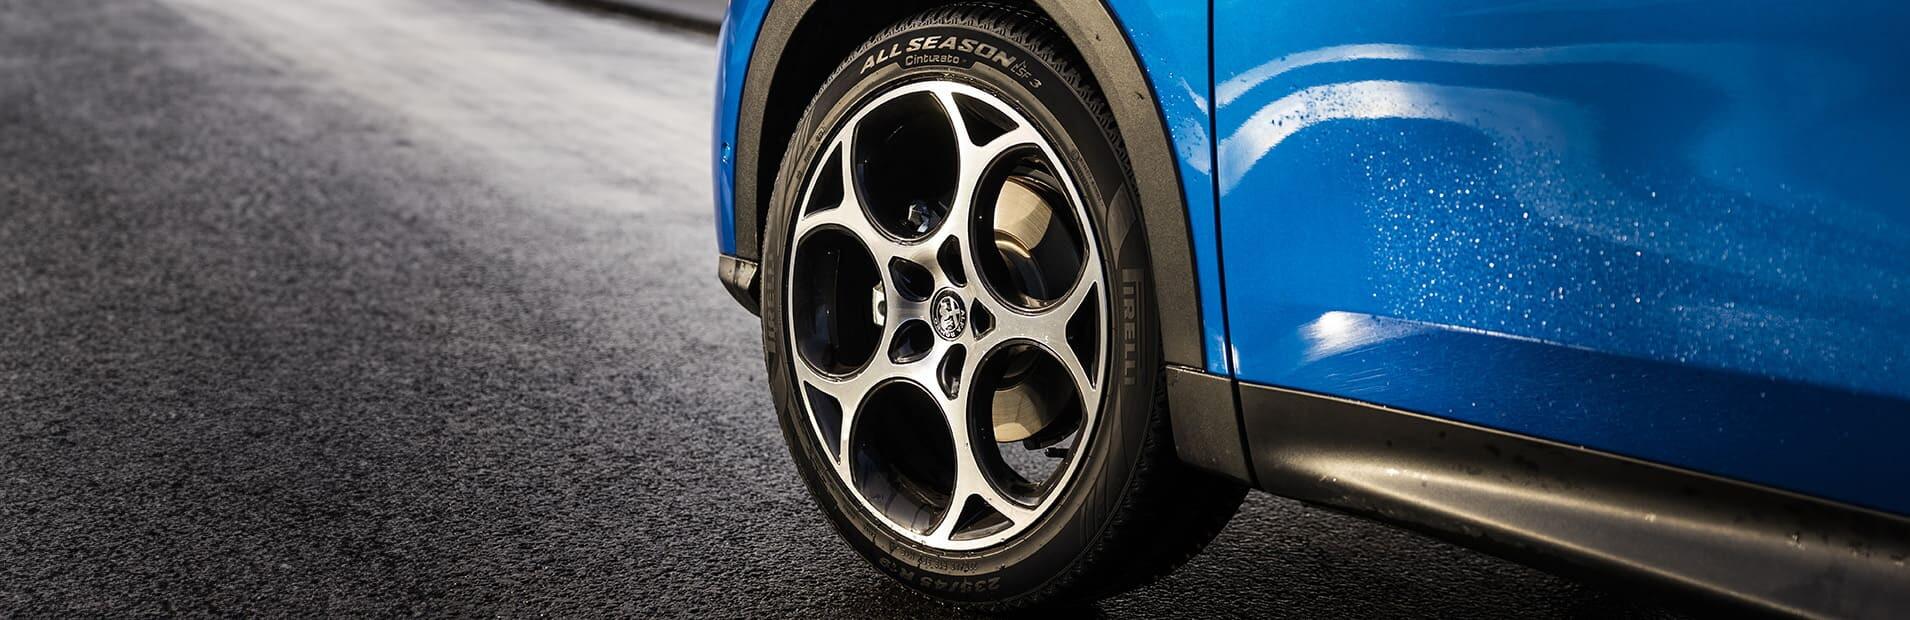 The best All Season tyre according to Auto Bild